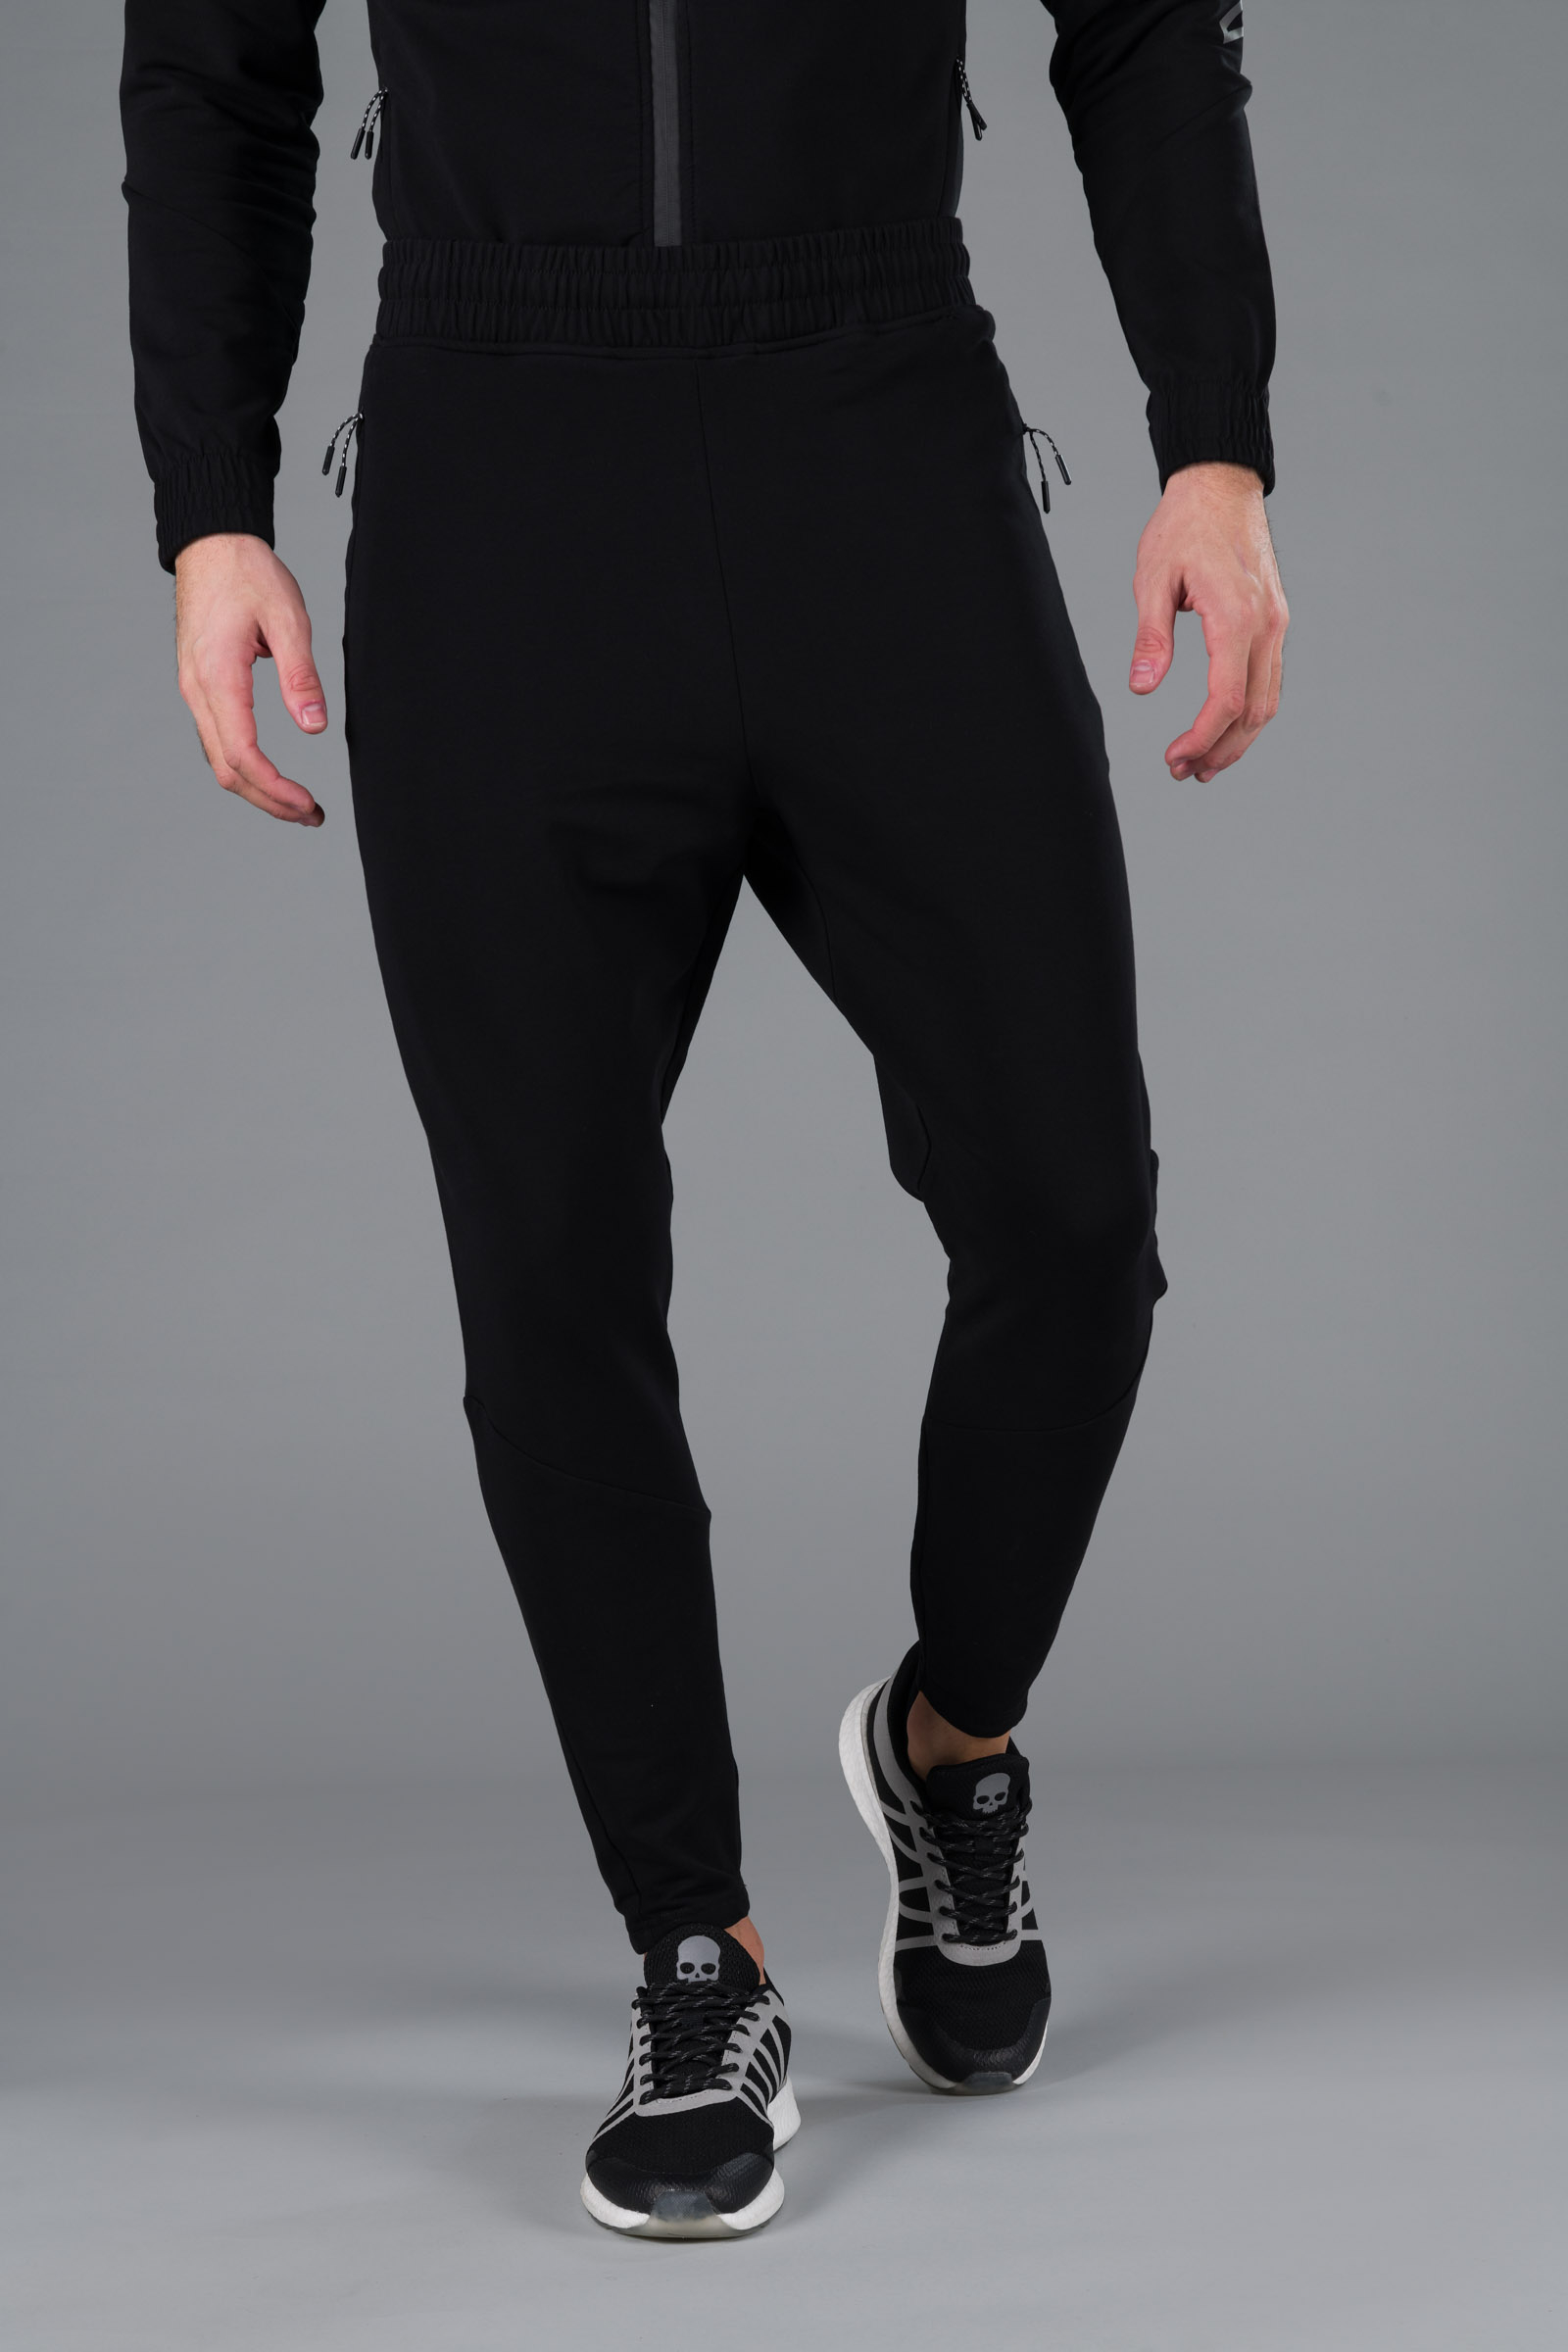 HYDROGEN PANTS - BLACK - Abbigliamento sportivo | Hydrogen